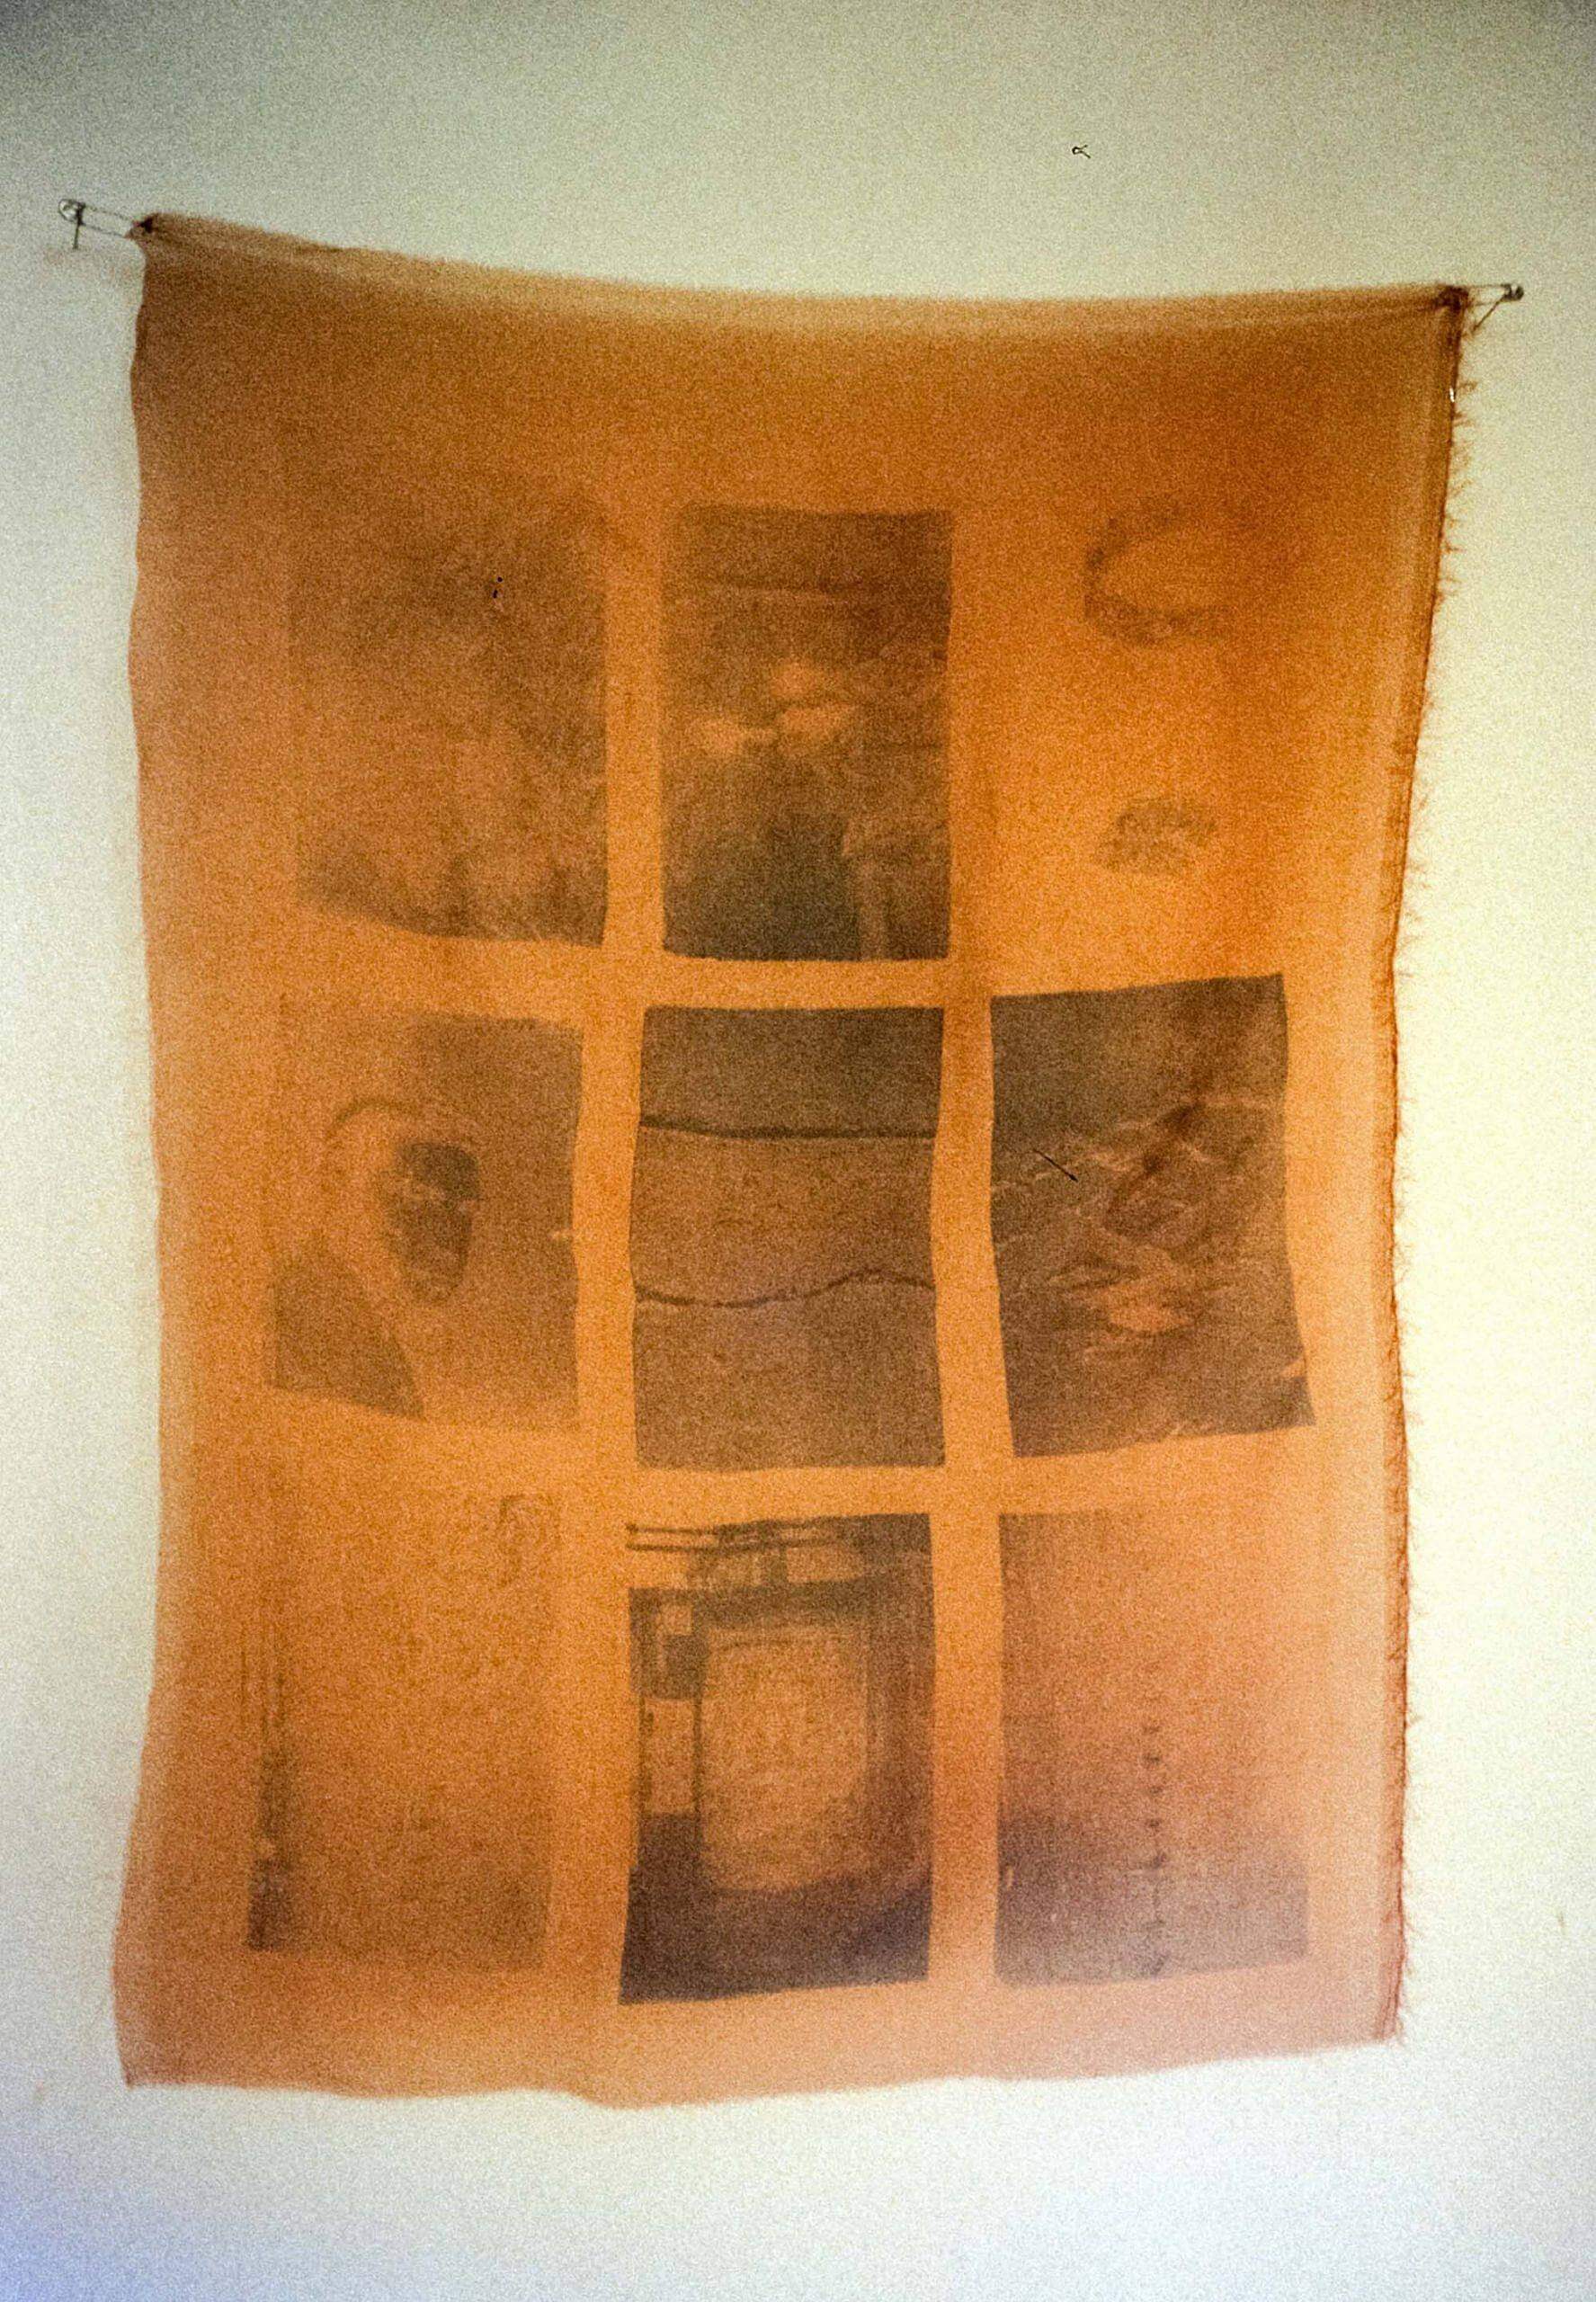 images printed on orange fabric